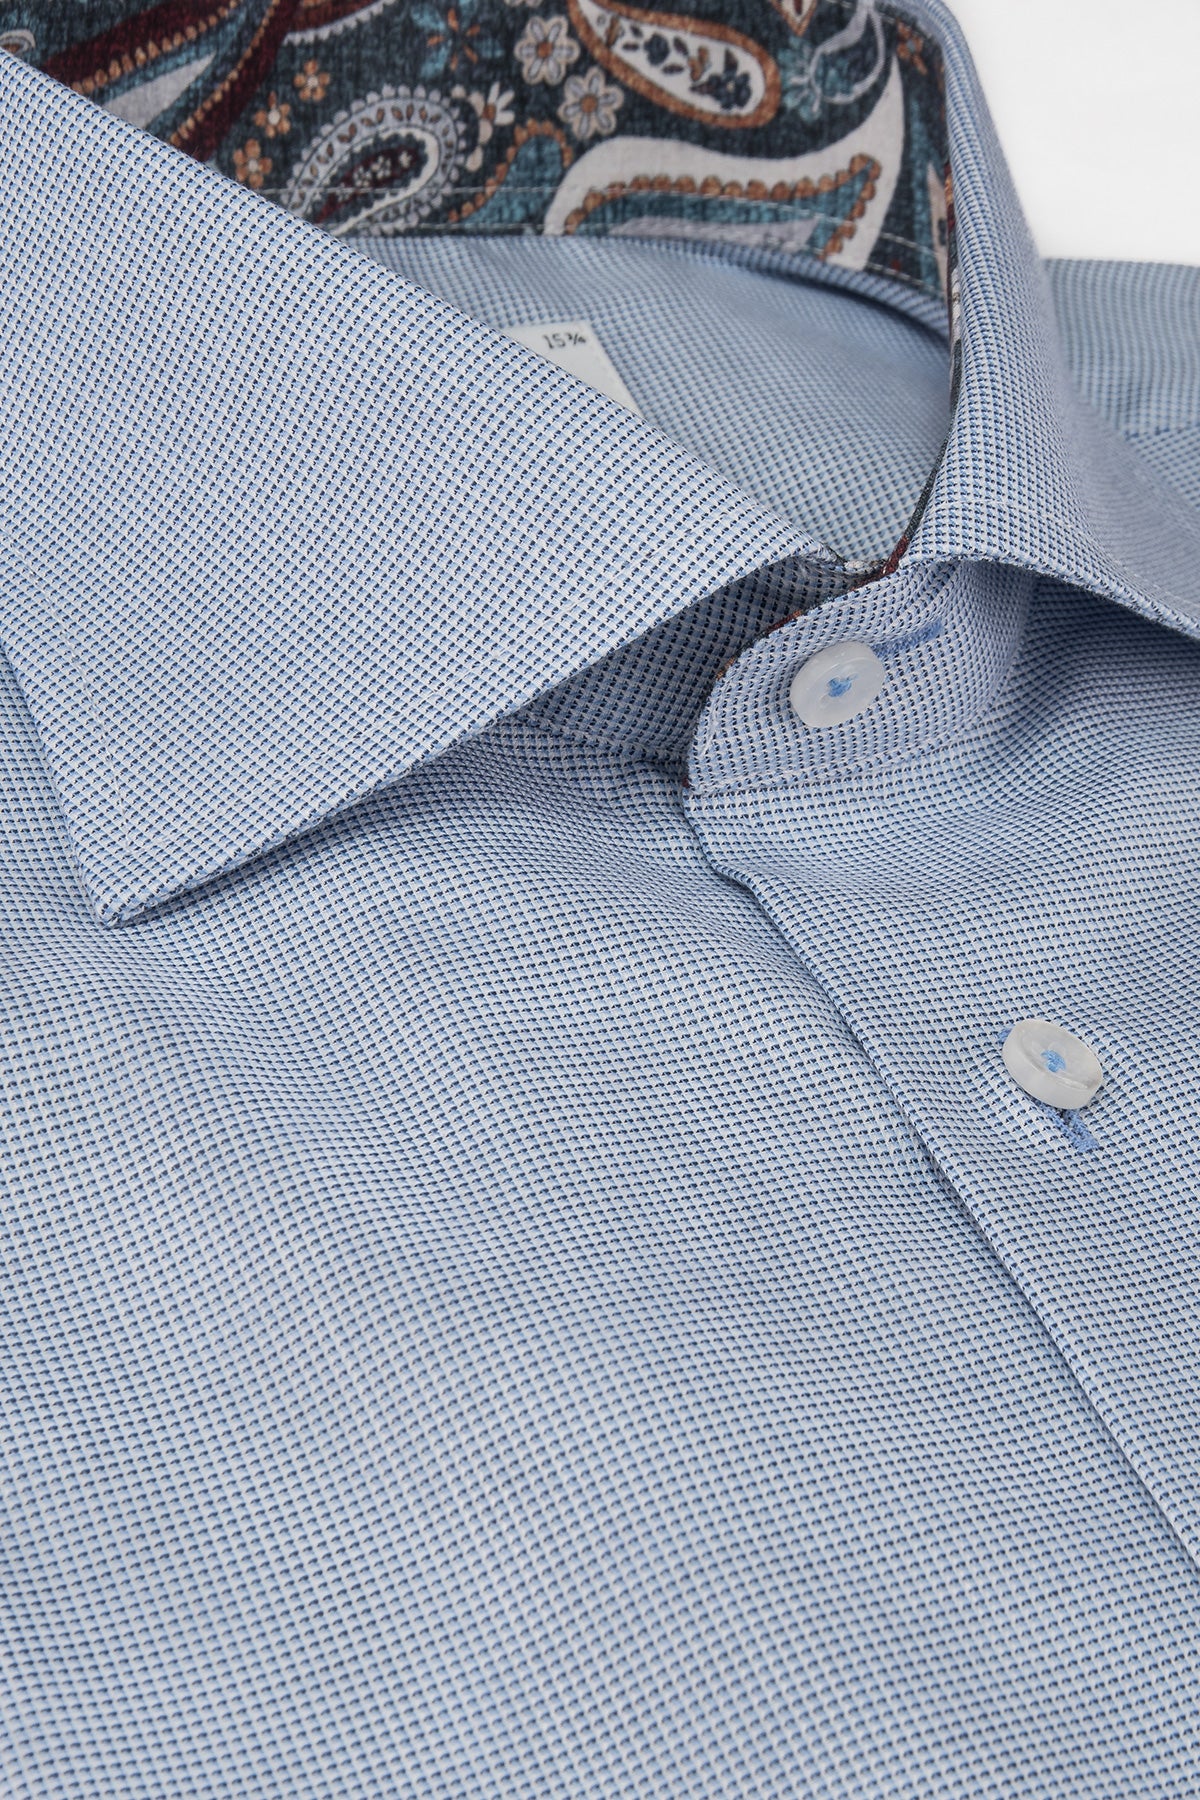 Light blue regular fit shirt with contrast details